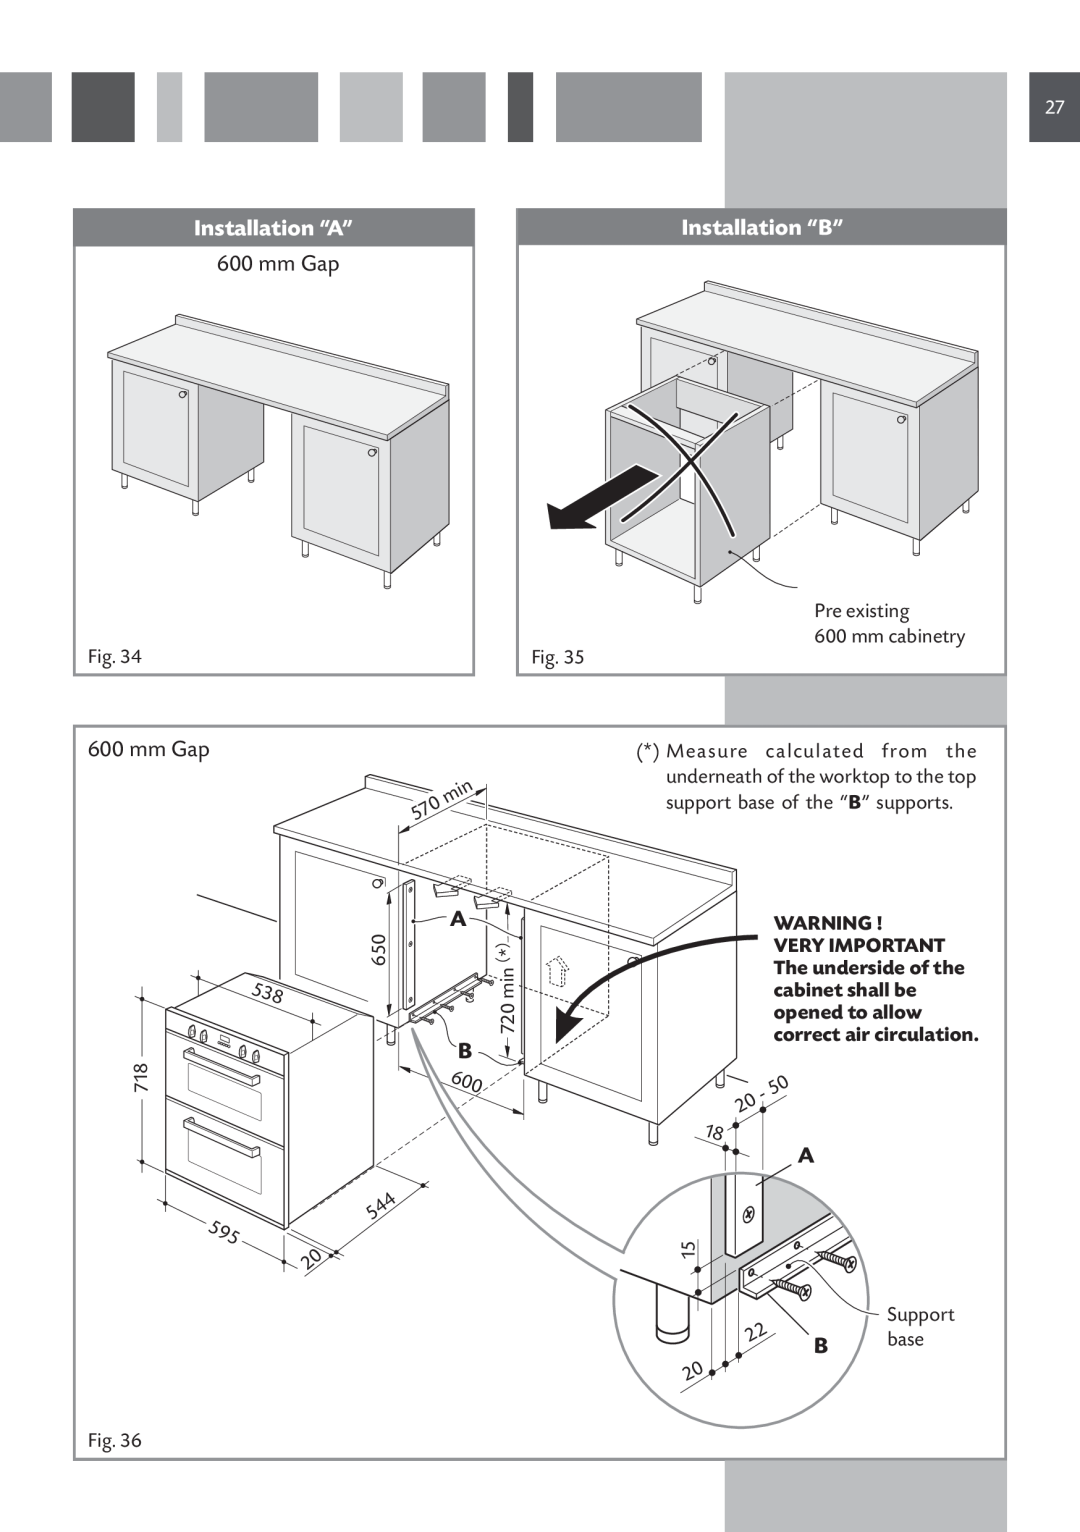 CDA DC730 manual Installation “B”, mm Gap, Installation “A”, mm cabinetry, Support 